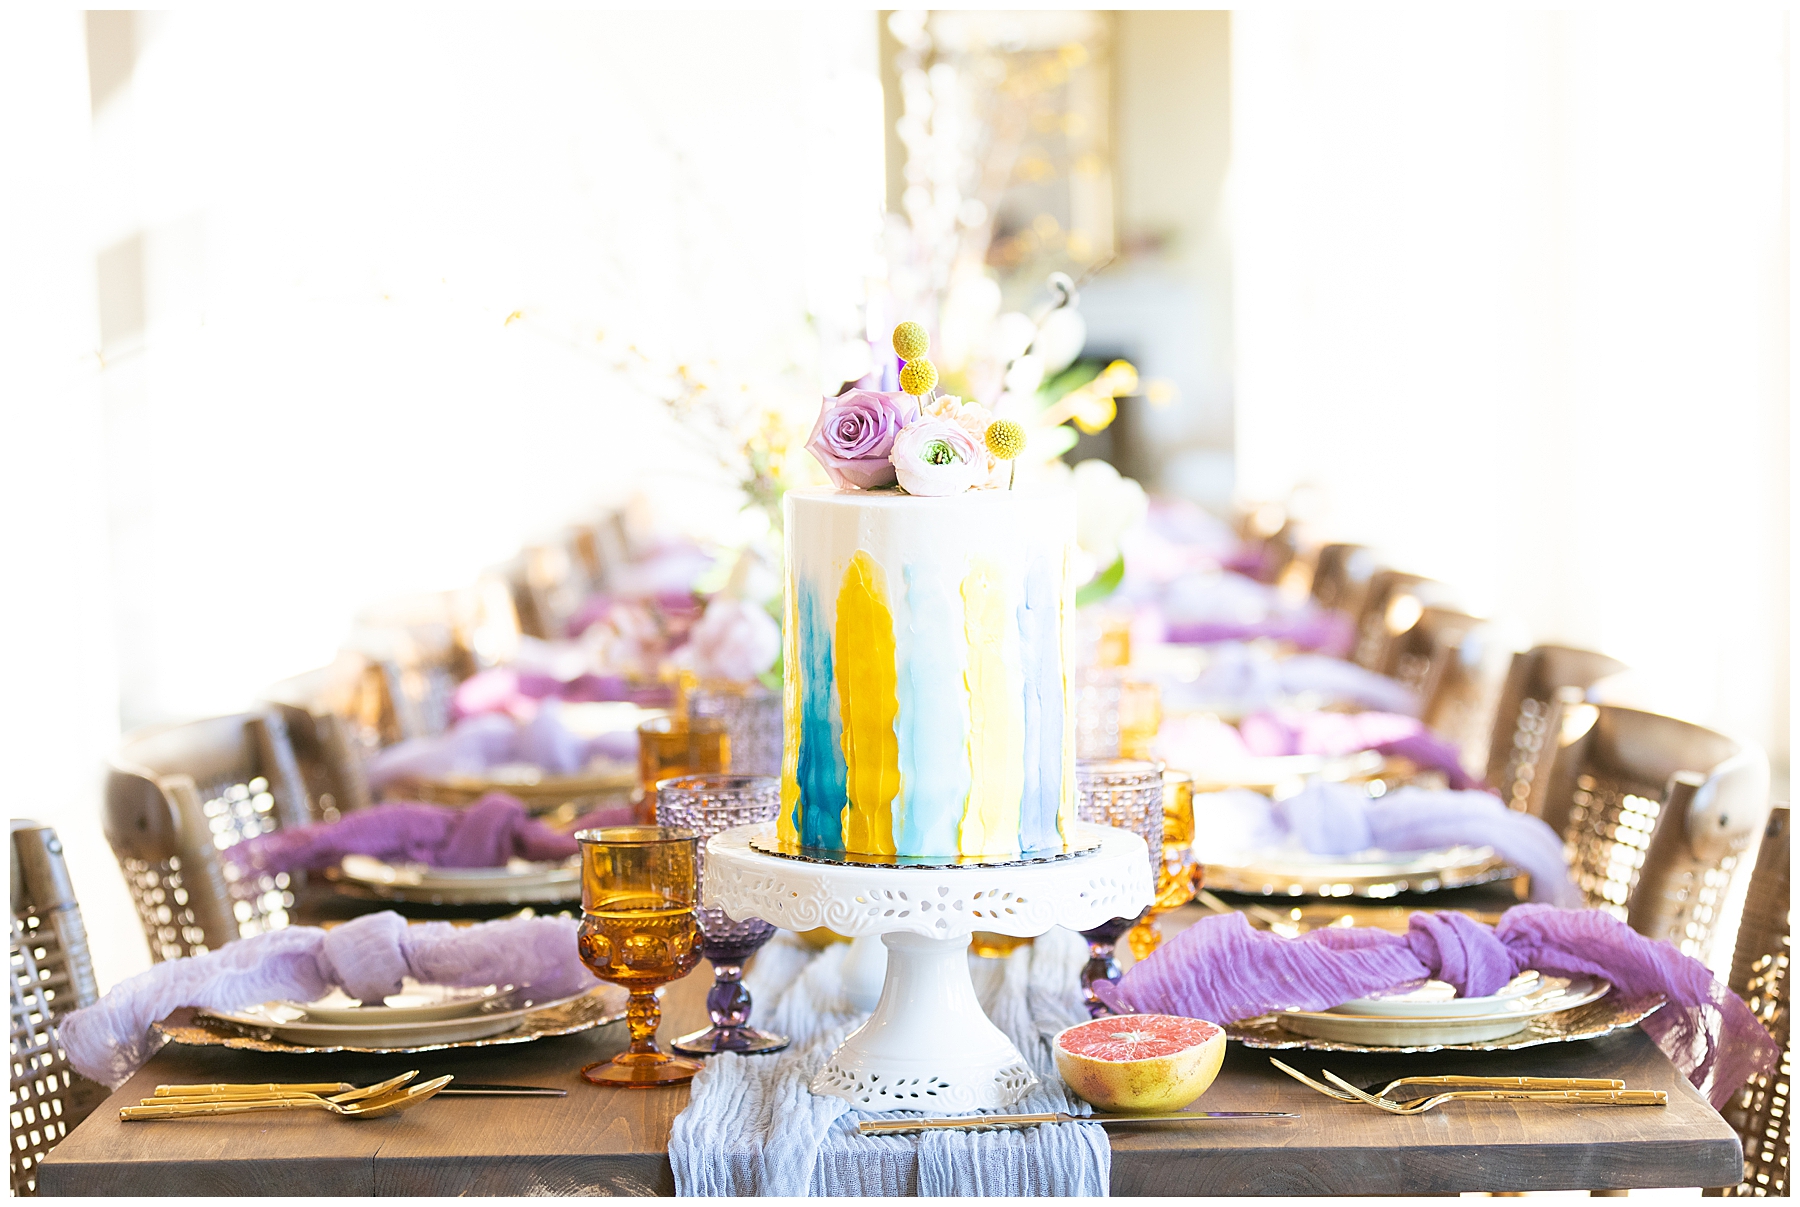 wedding cake and table setting at Ct wedding